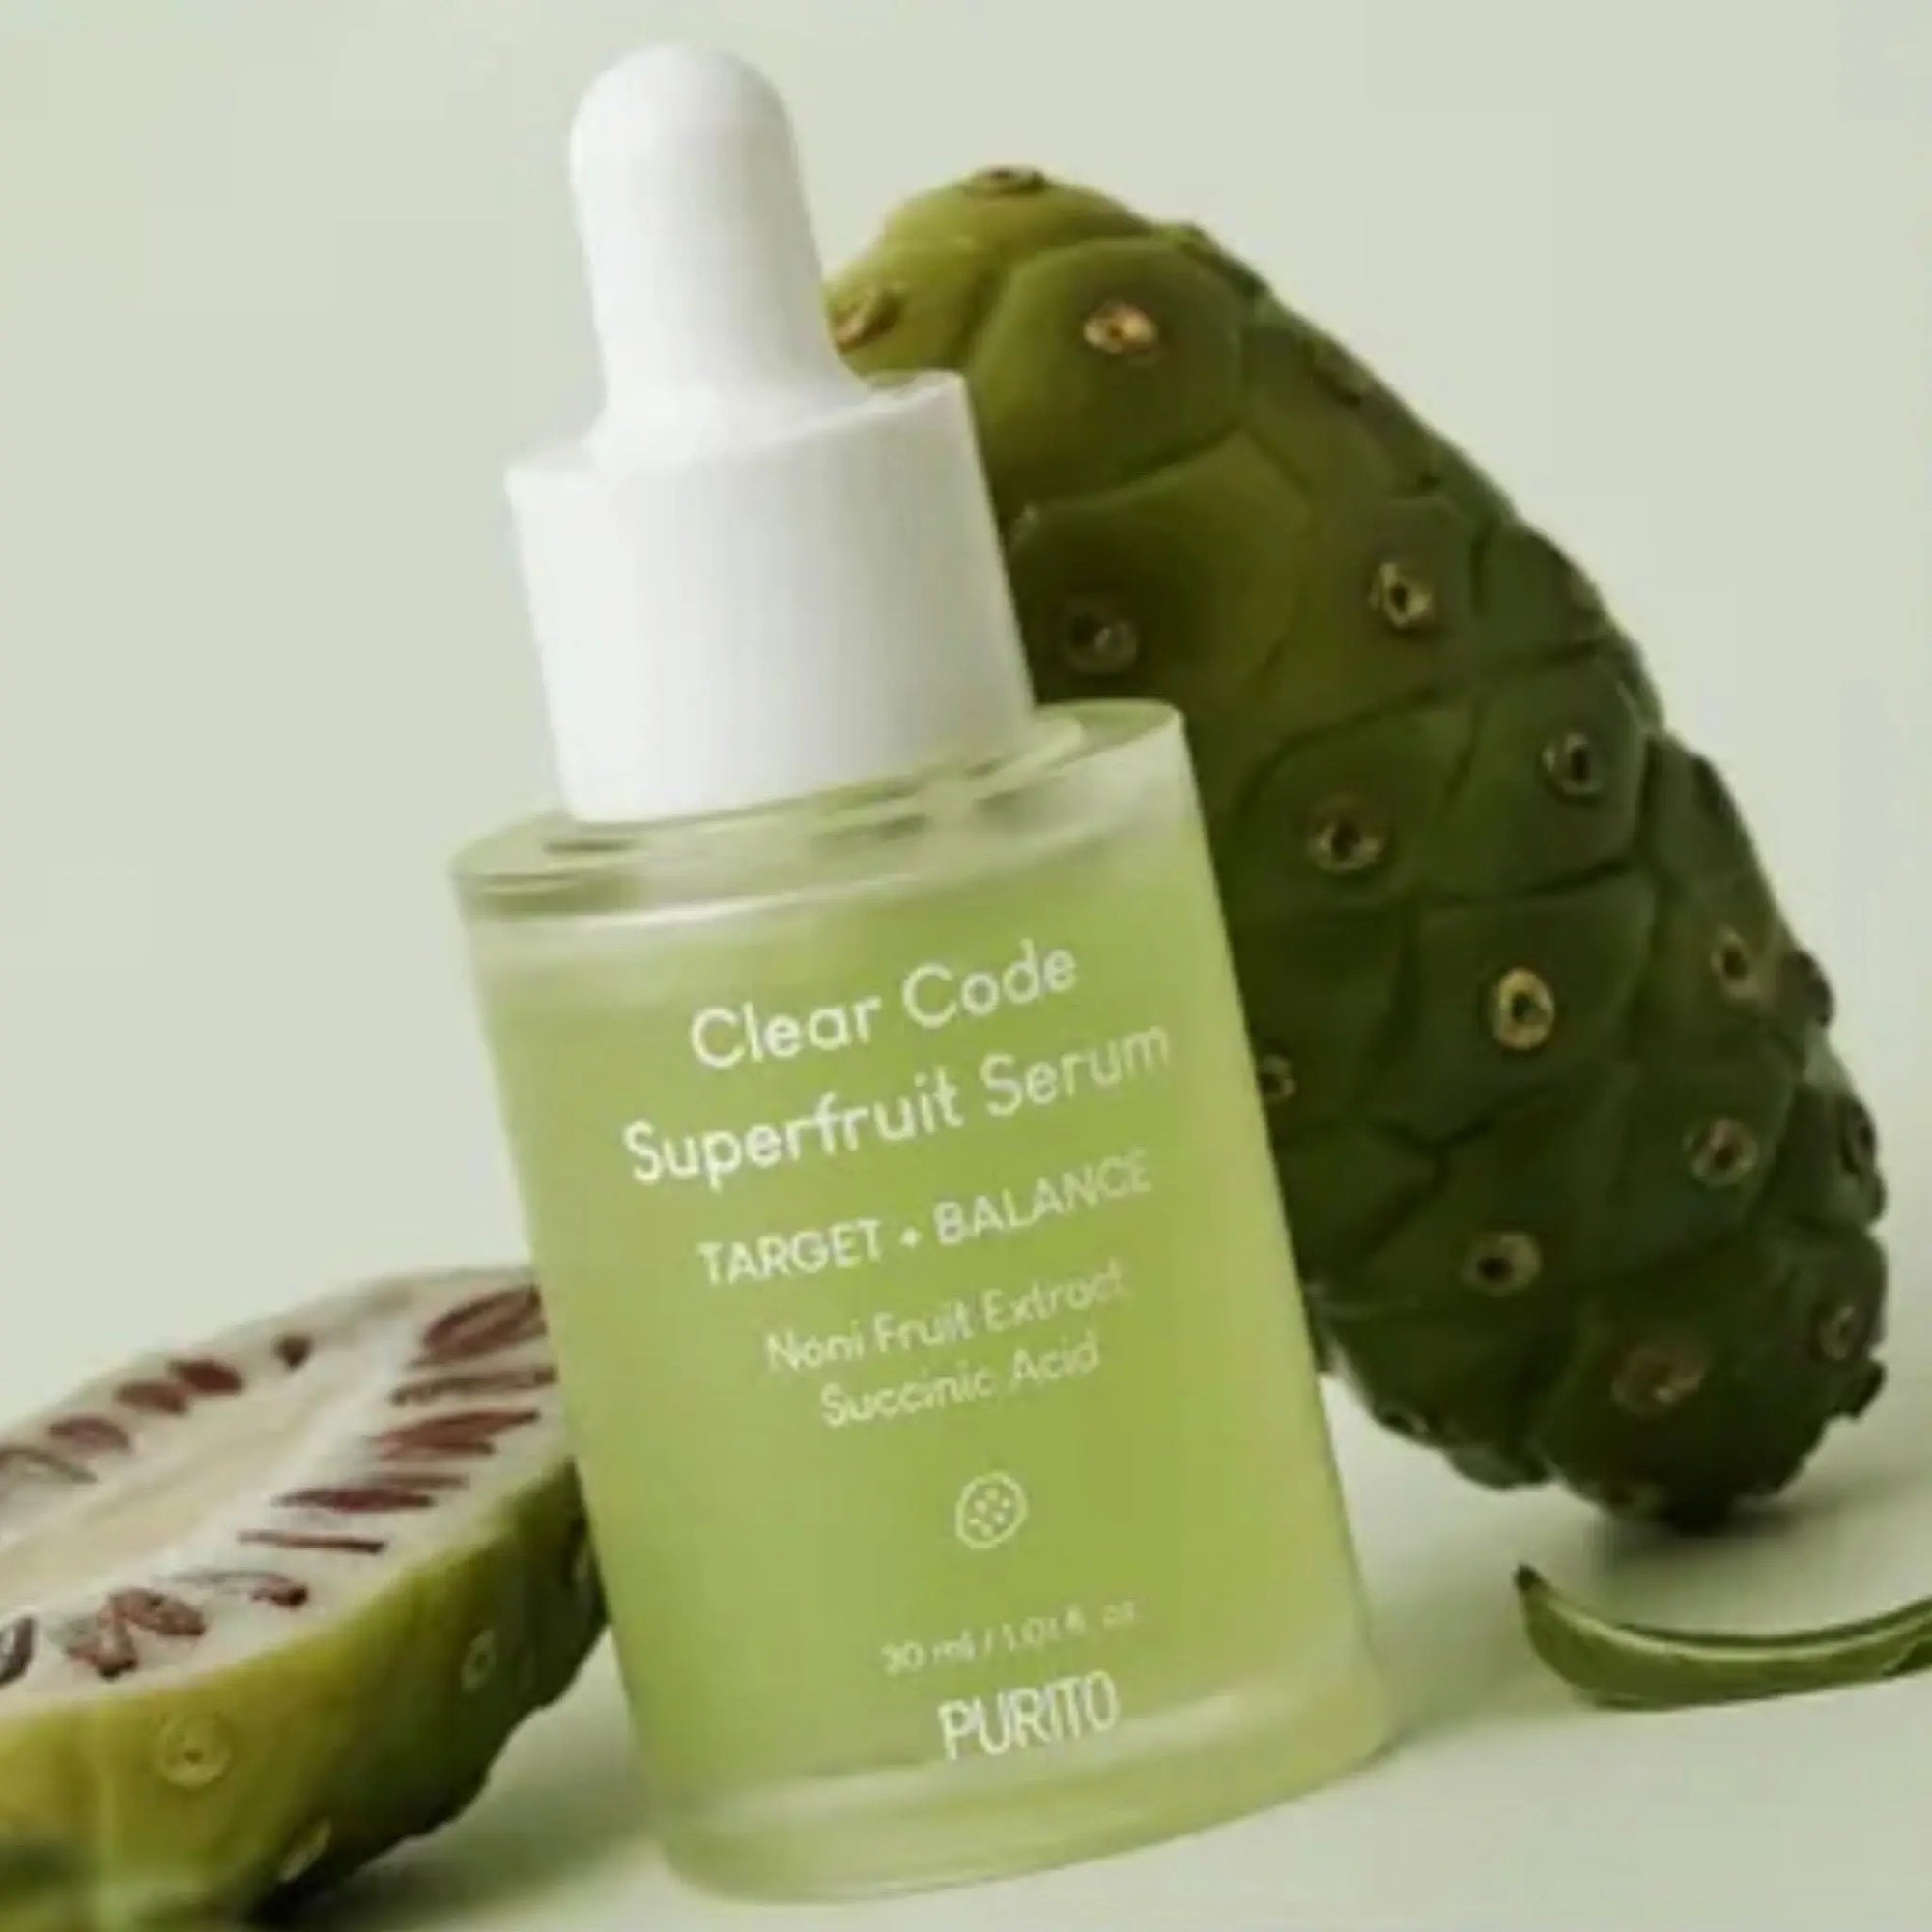 Purito - Clear Code Superfruit Serum Purito